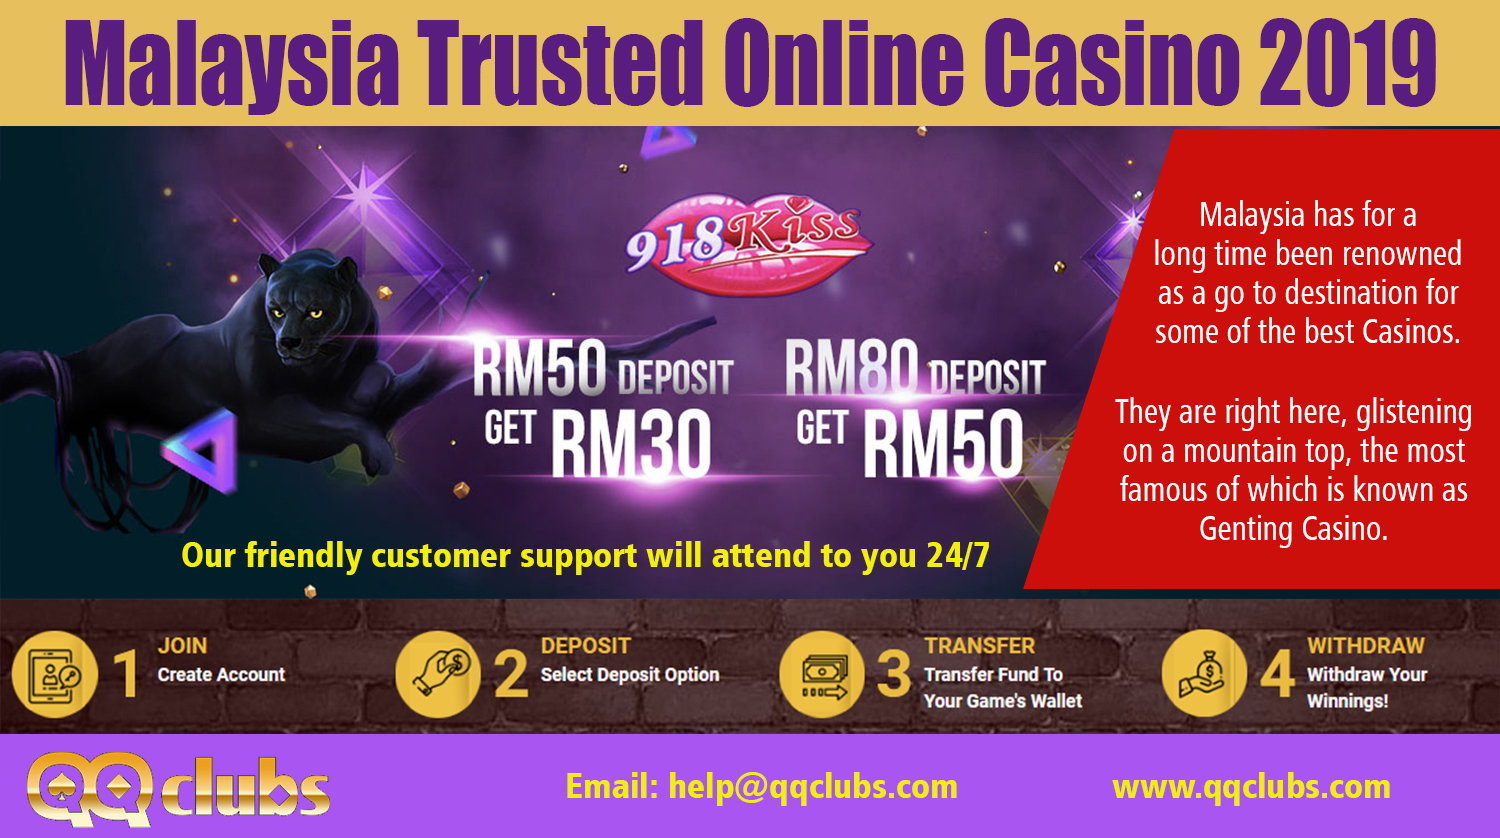 trusted online casino malaysia 2019 ipb